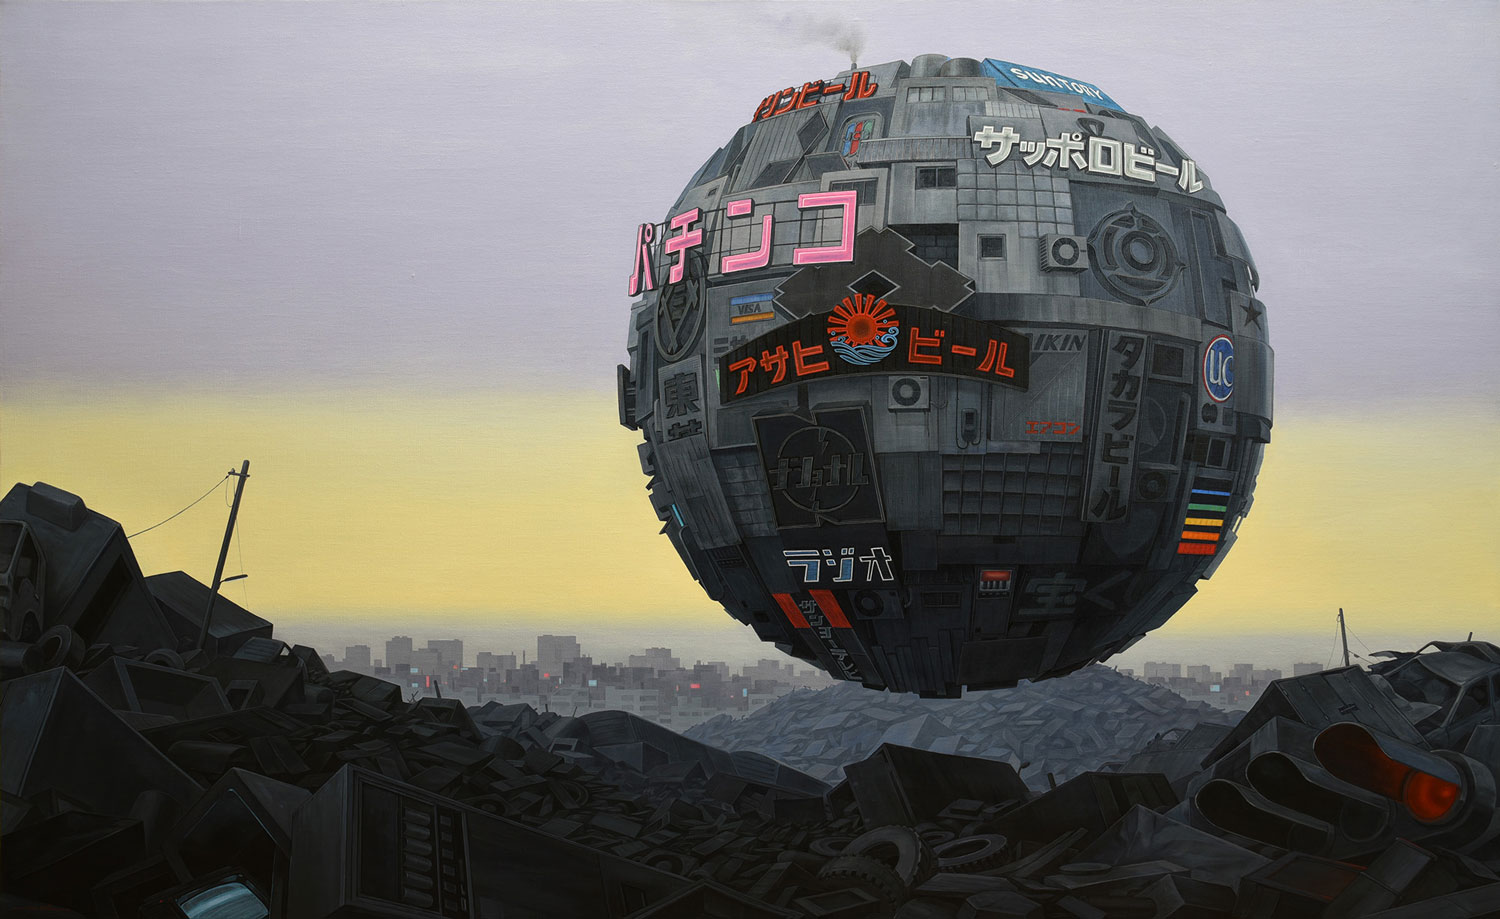 Masakatsu Sashie Illustrates Levitating Spheres